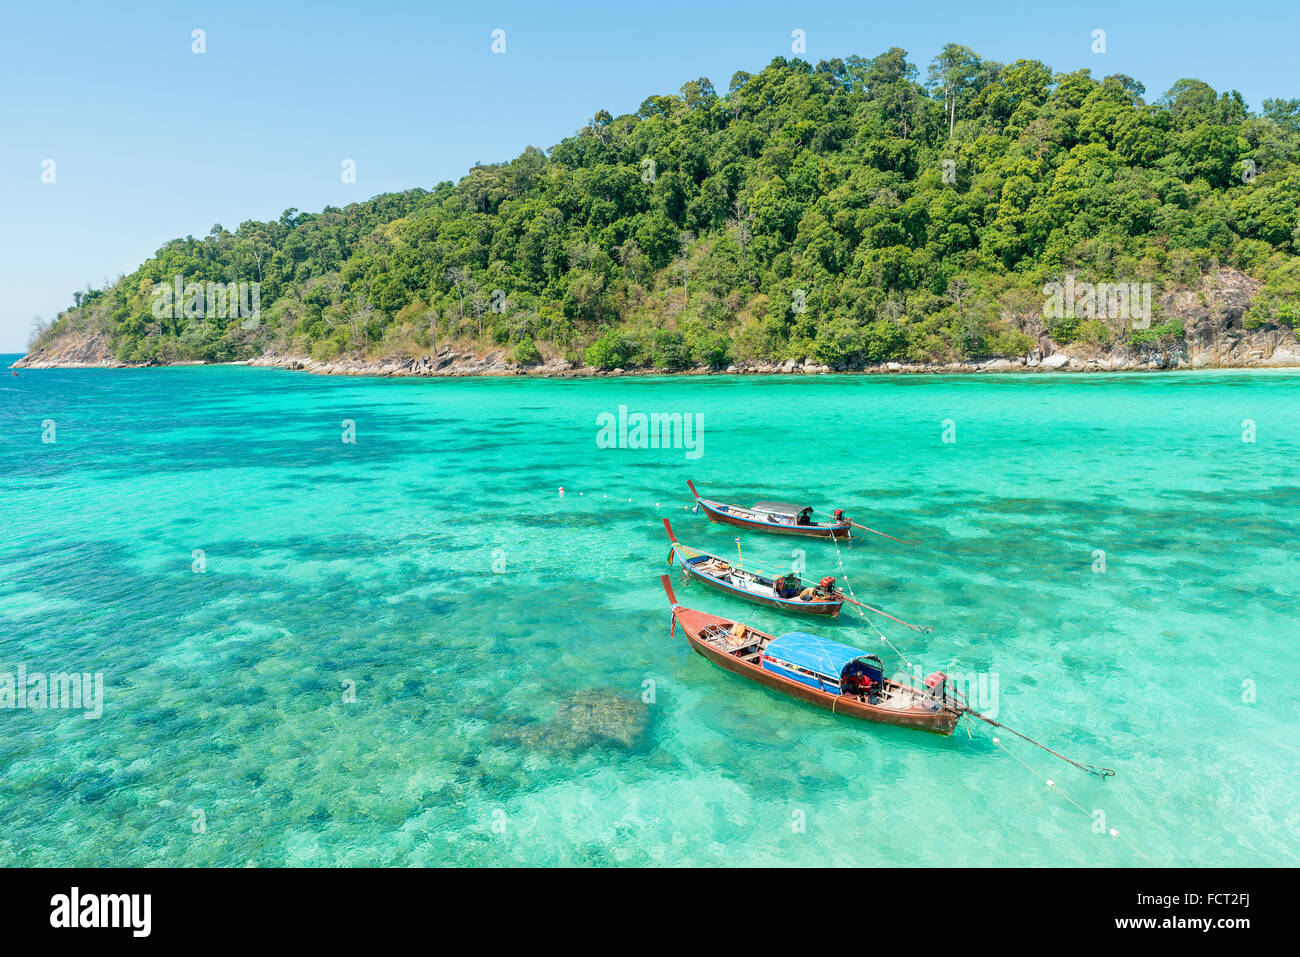 Summer, Travel, Vacation and Holiday concept - Tropical beach, longtail boats, Andaman Sea in Phuket, Thailand Stock Photo